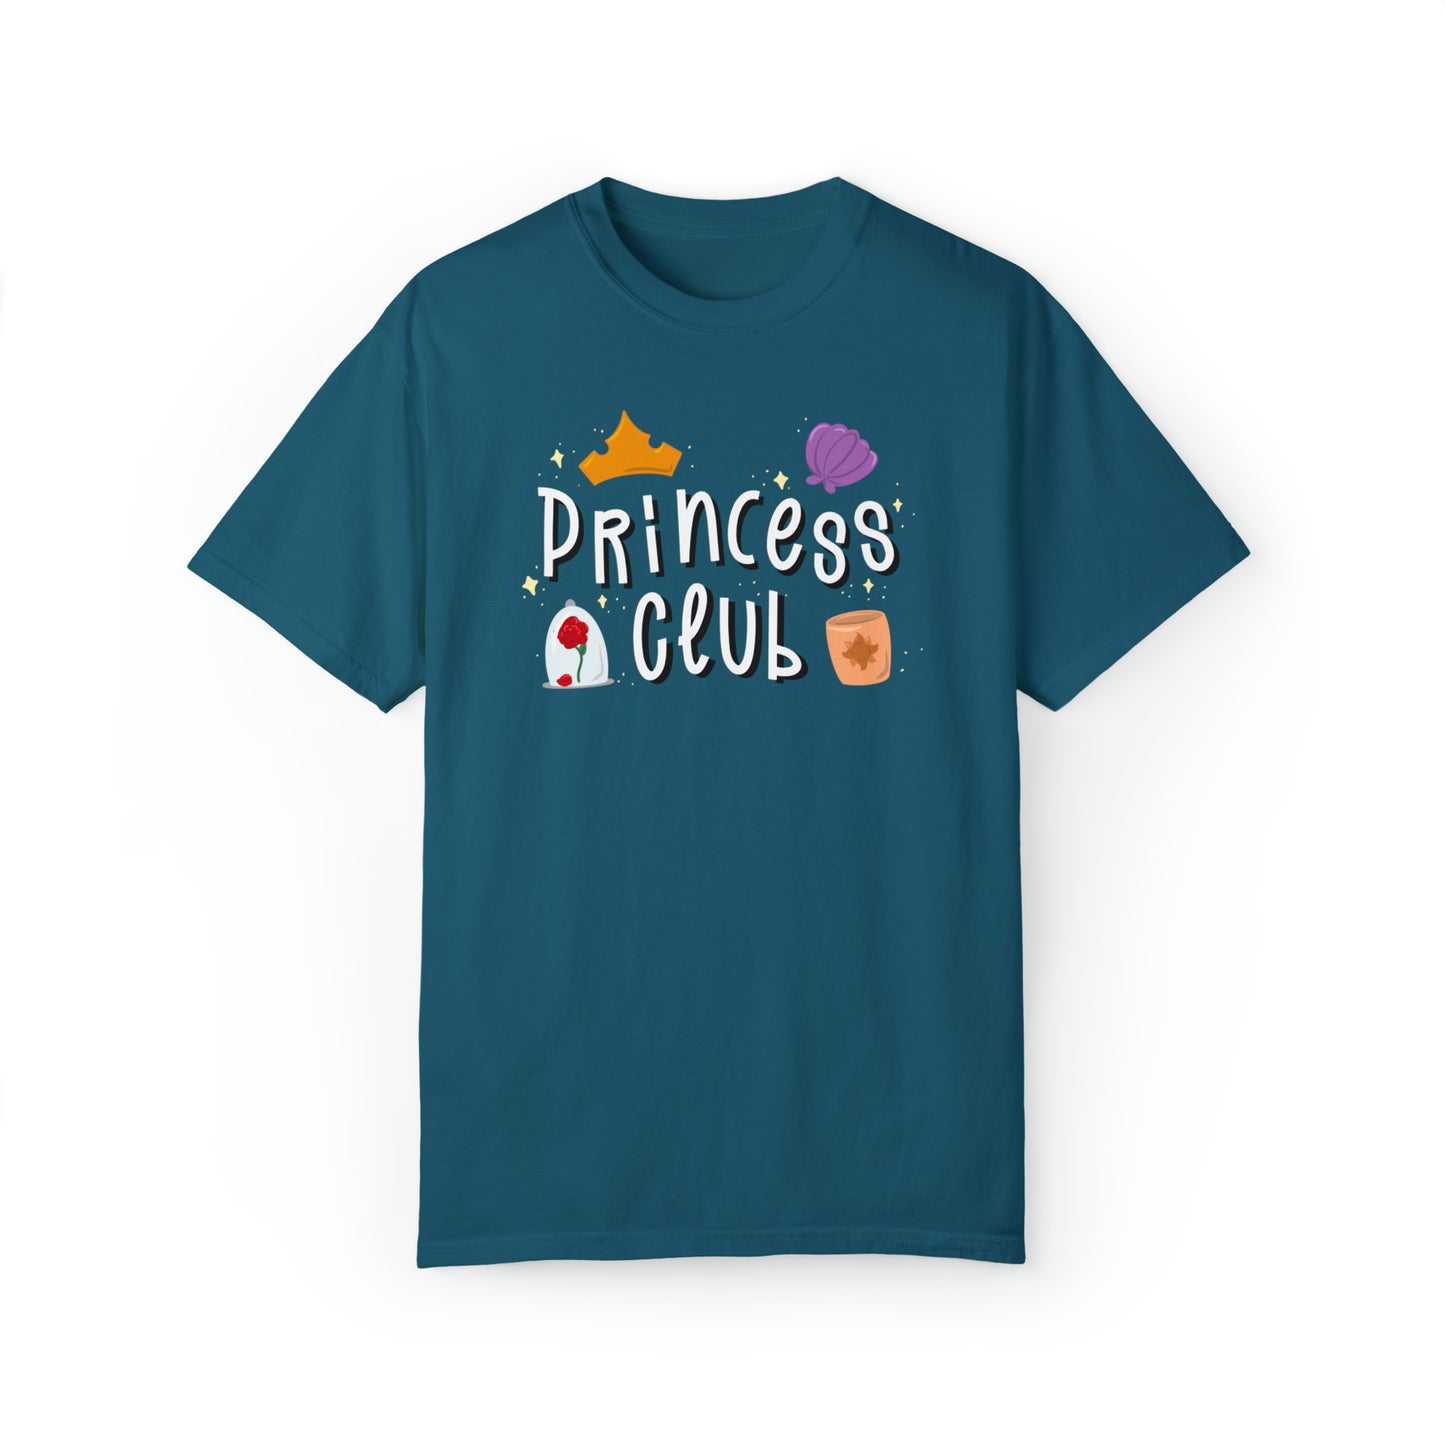 Adult Princess Club Tee - Comfort Colors